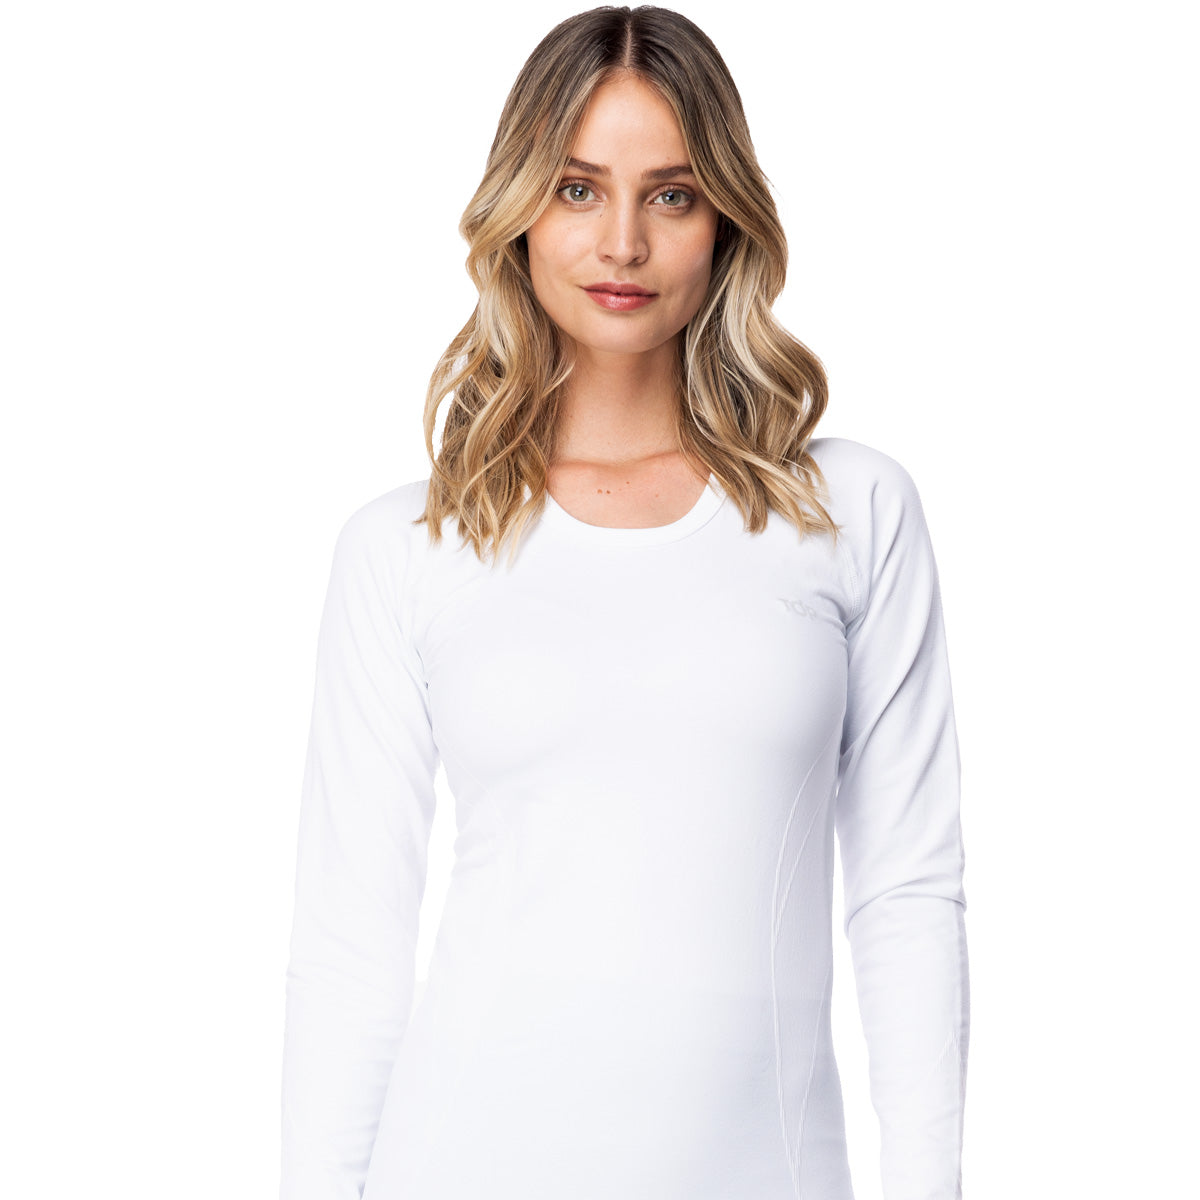 Camiseta Mujer Deportiva Primera Capa Microfibra Blanca